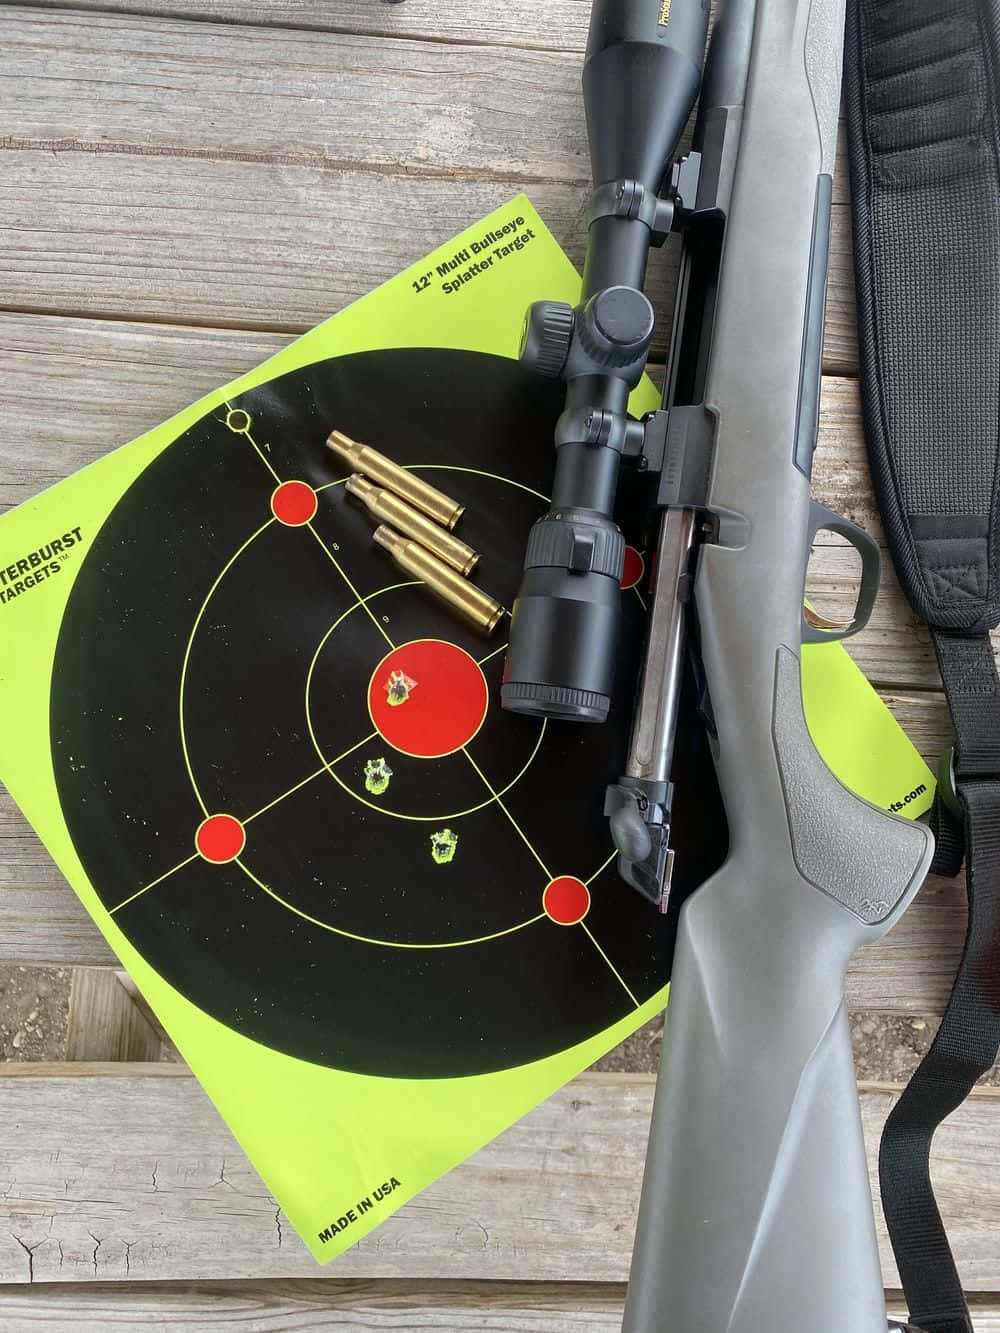 A sharpshooter taking aim during target practice